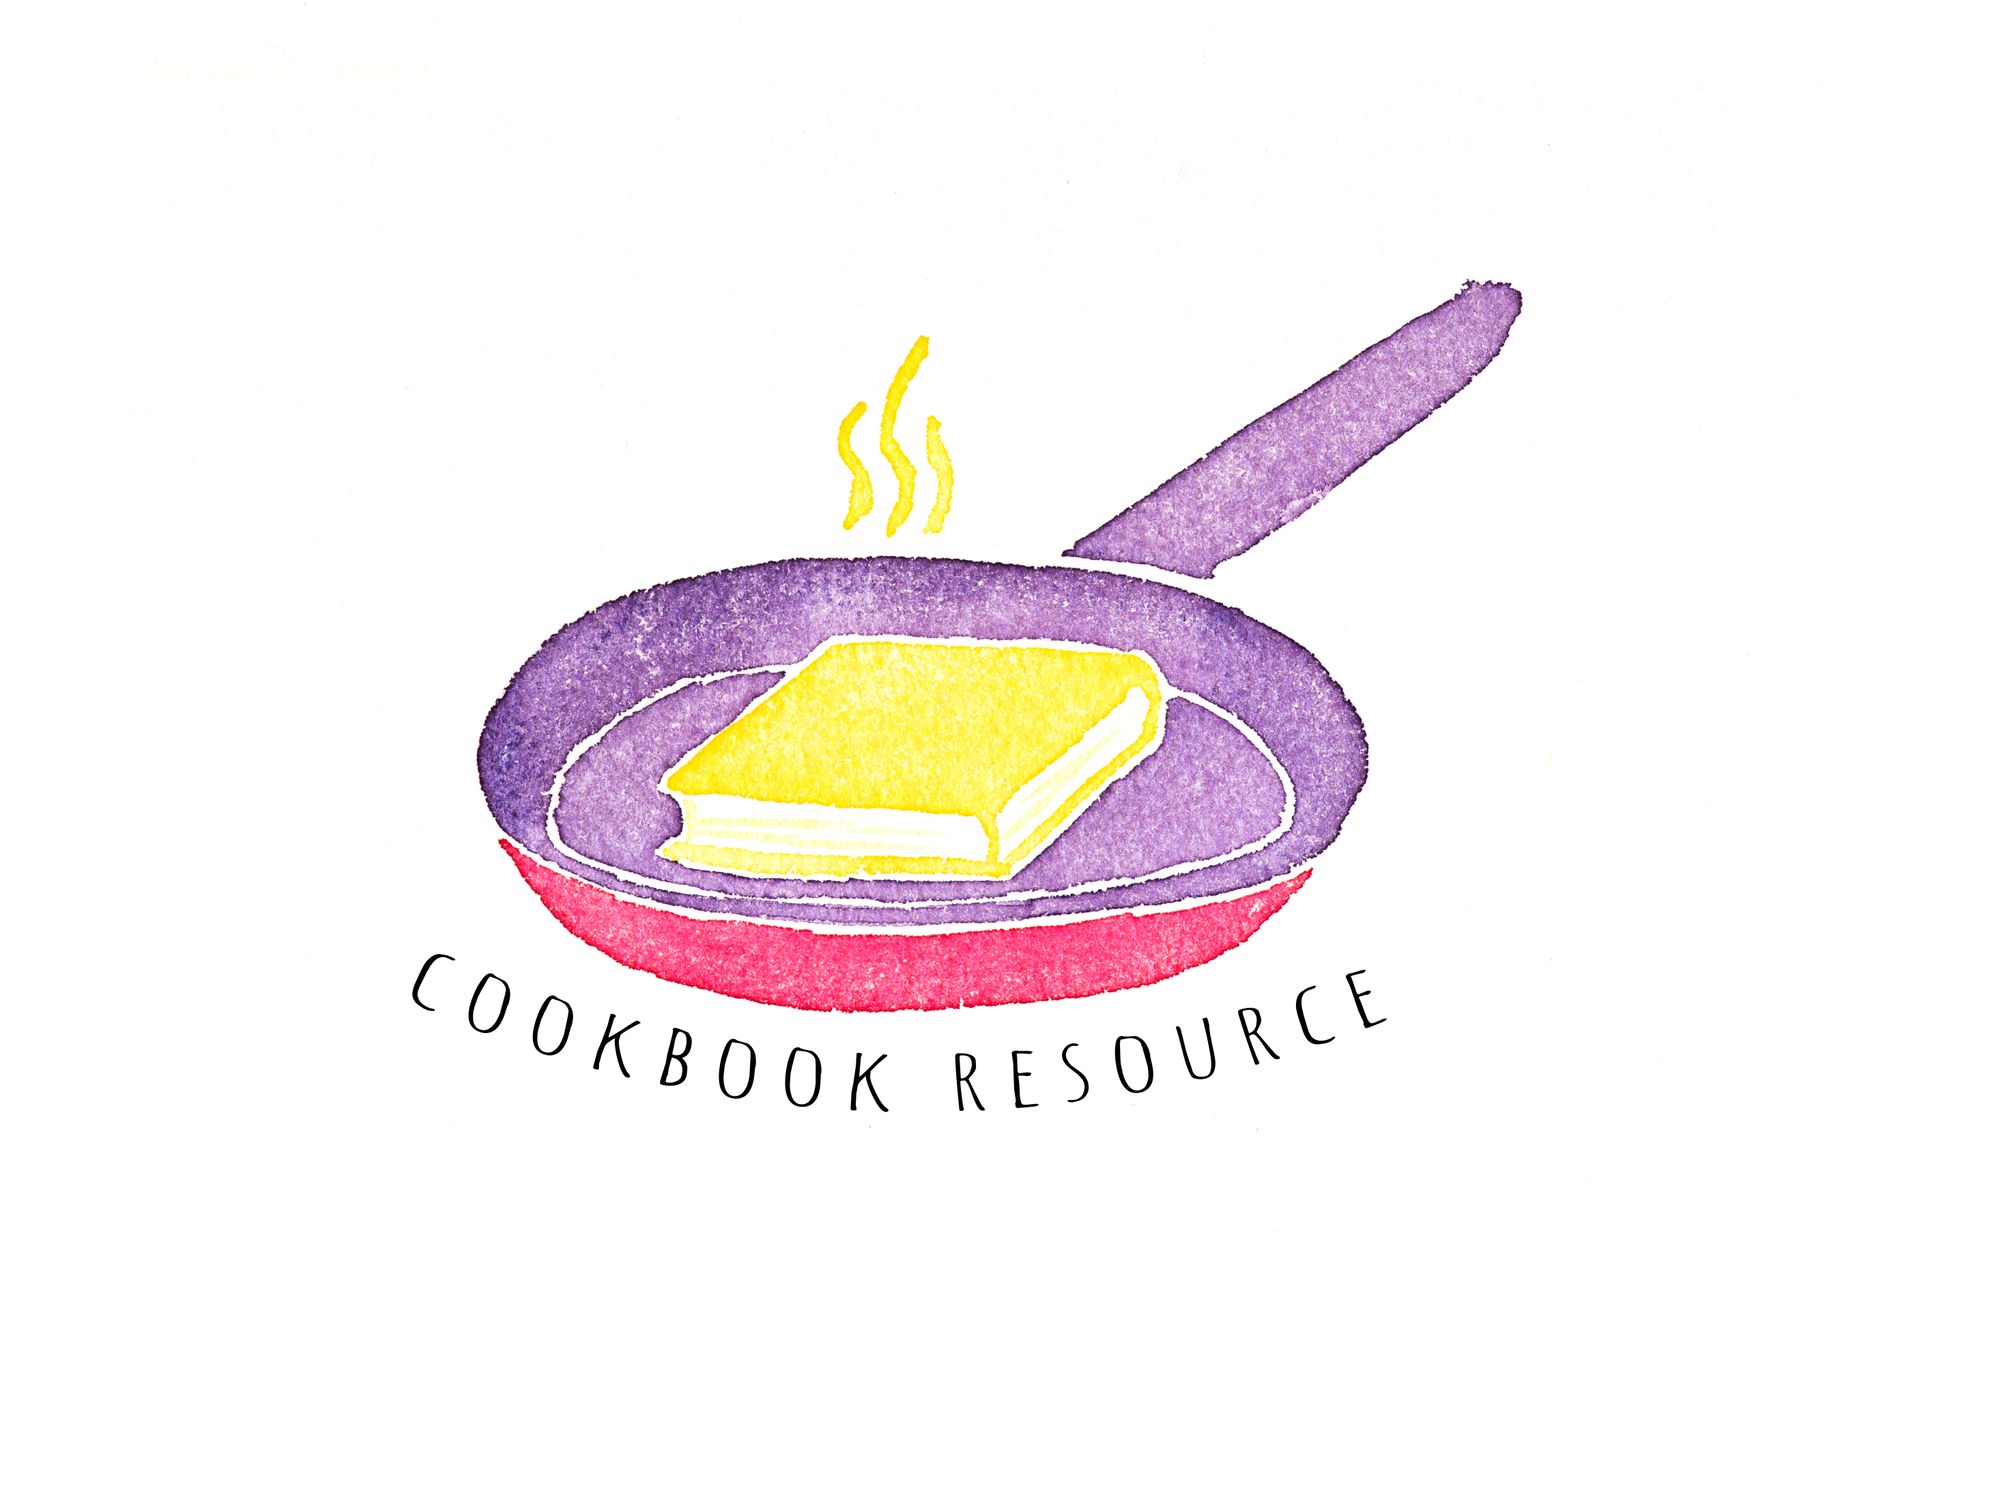 Cookbook Resource